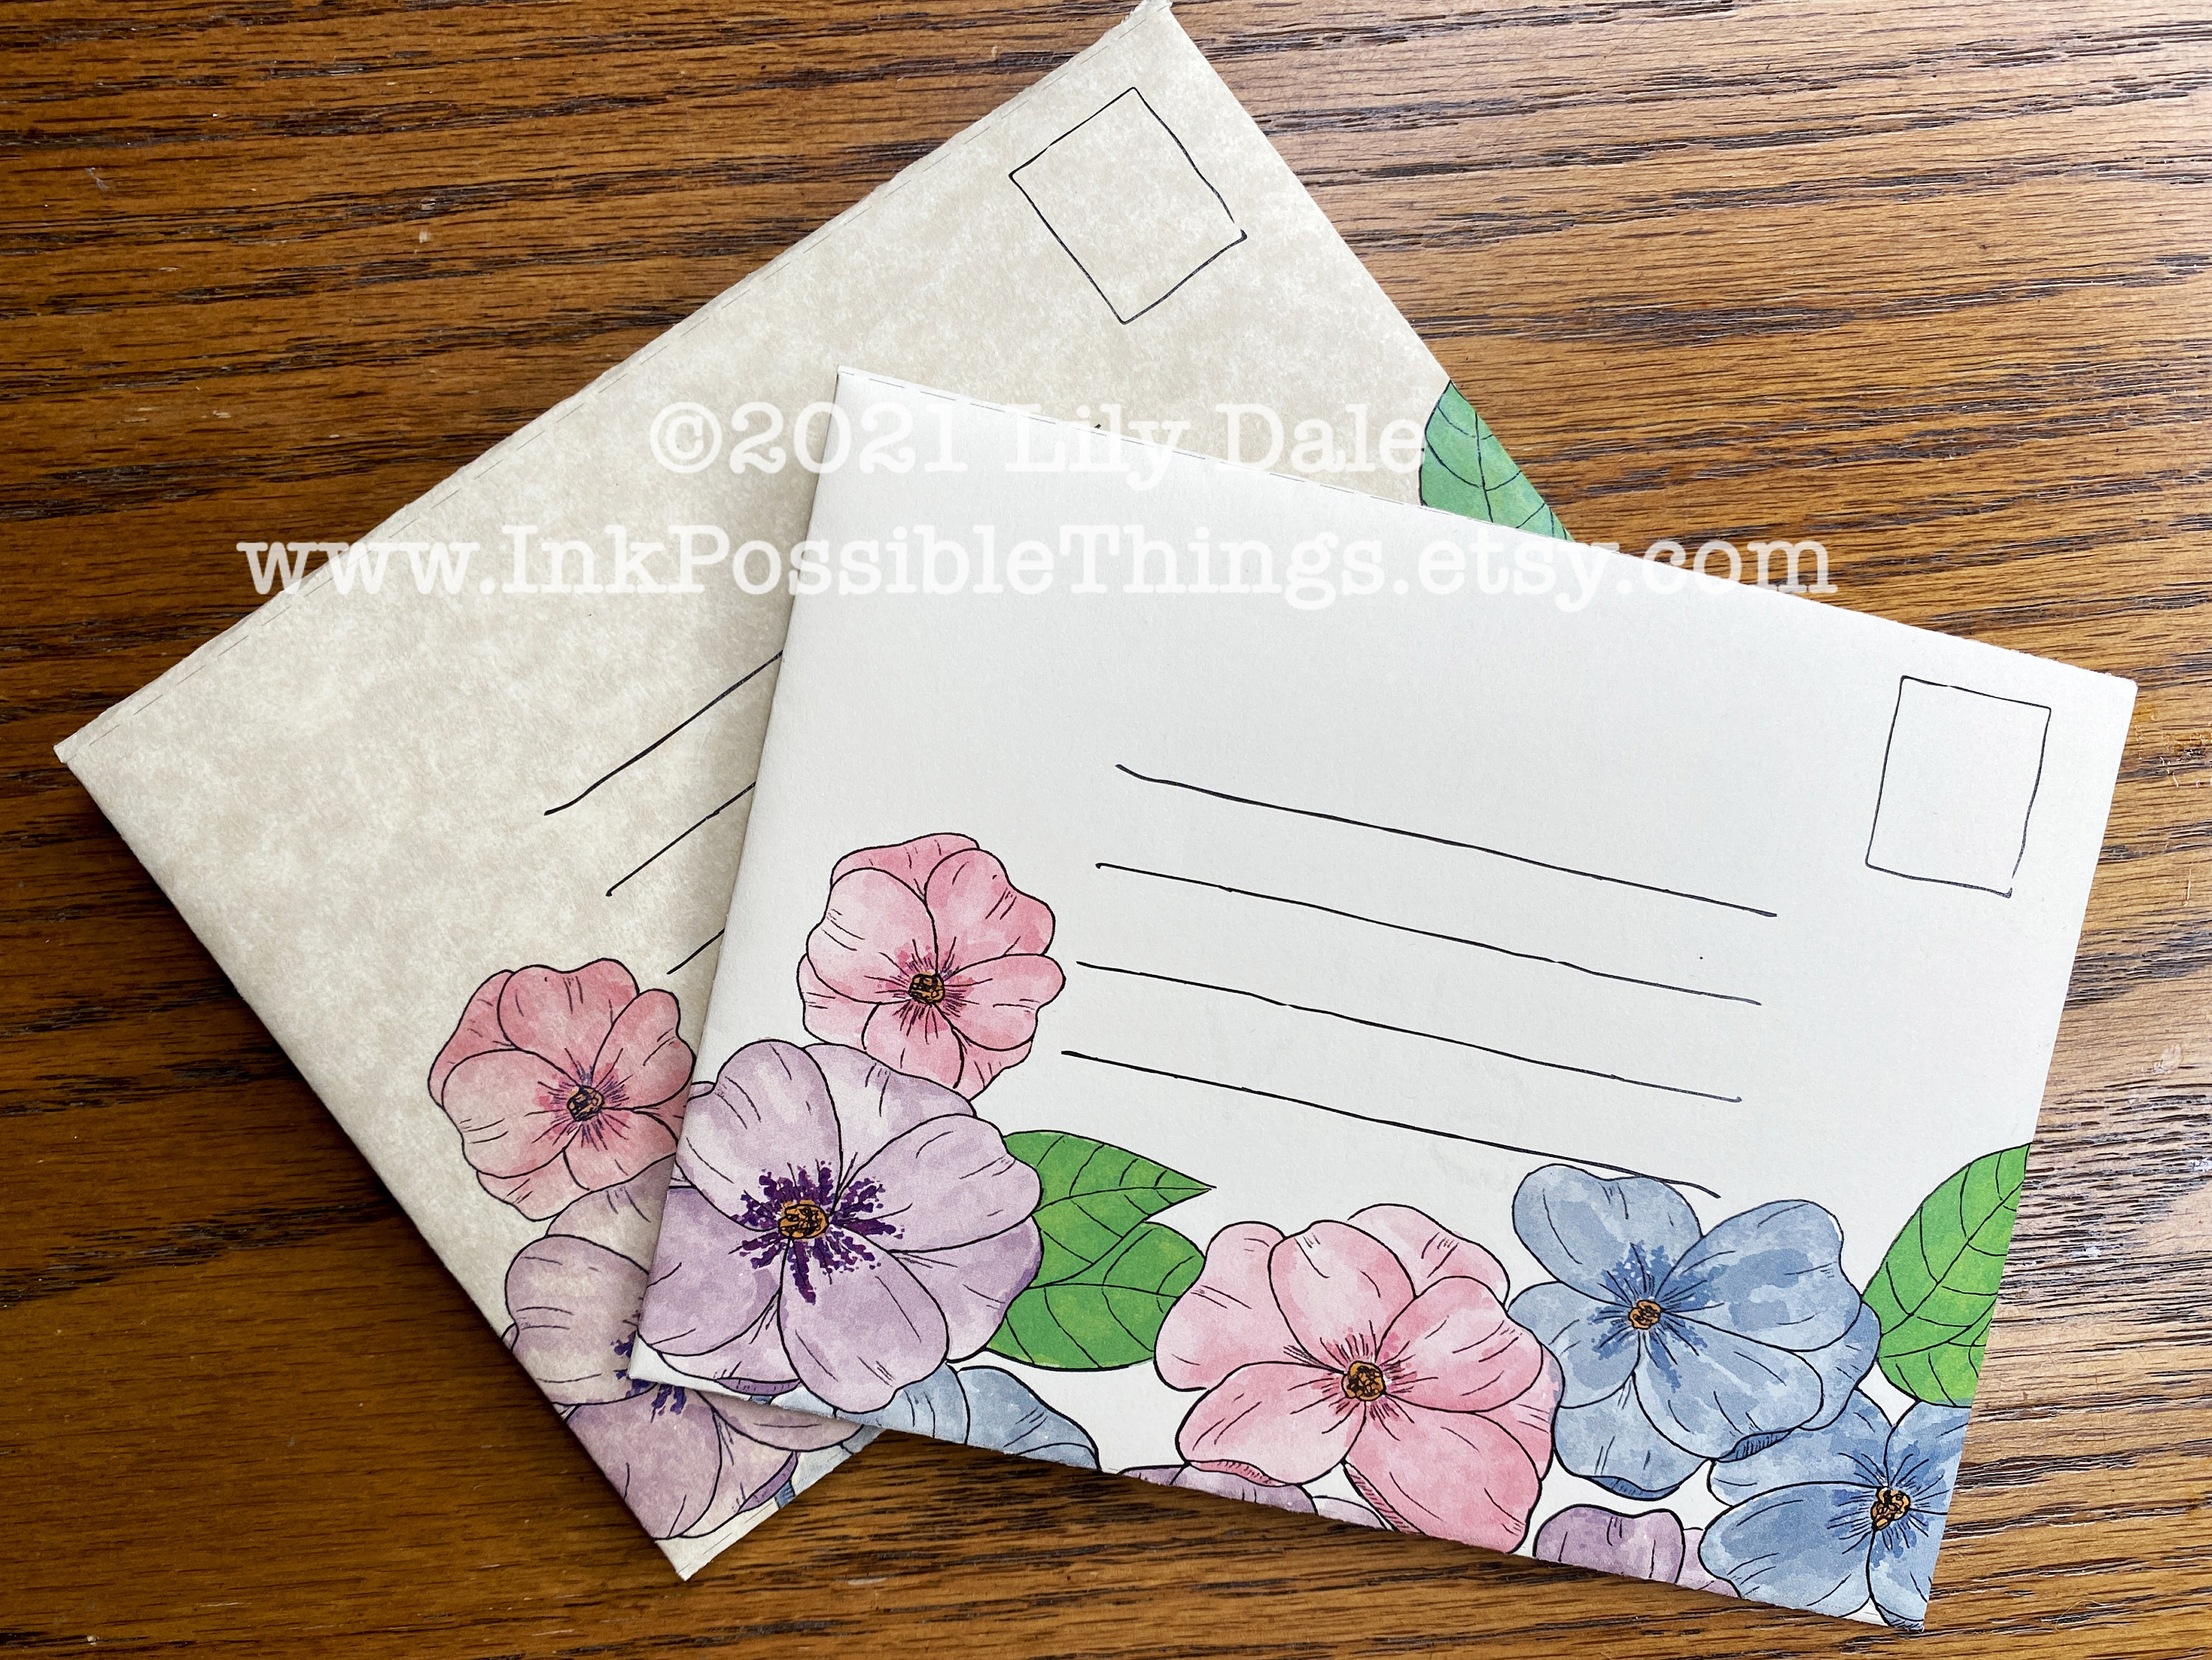 Floral Digital Envelope Template Made to Print at Home penpal ...